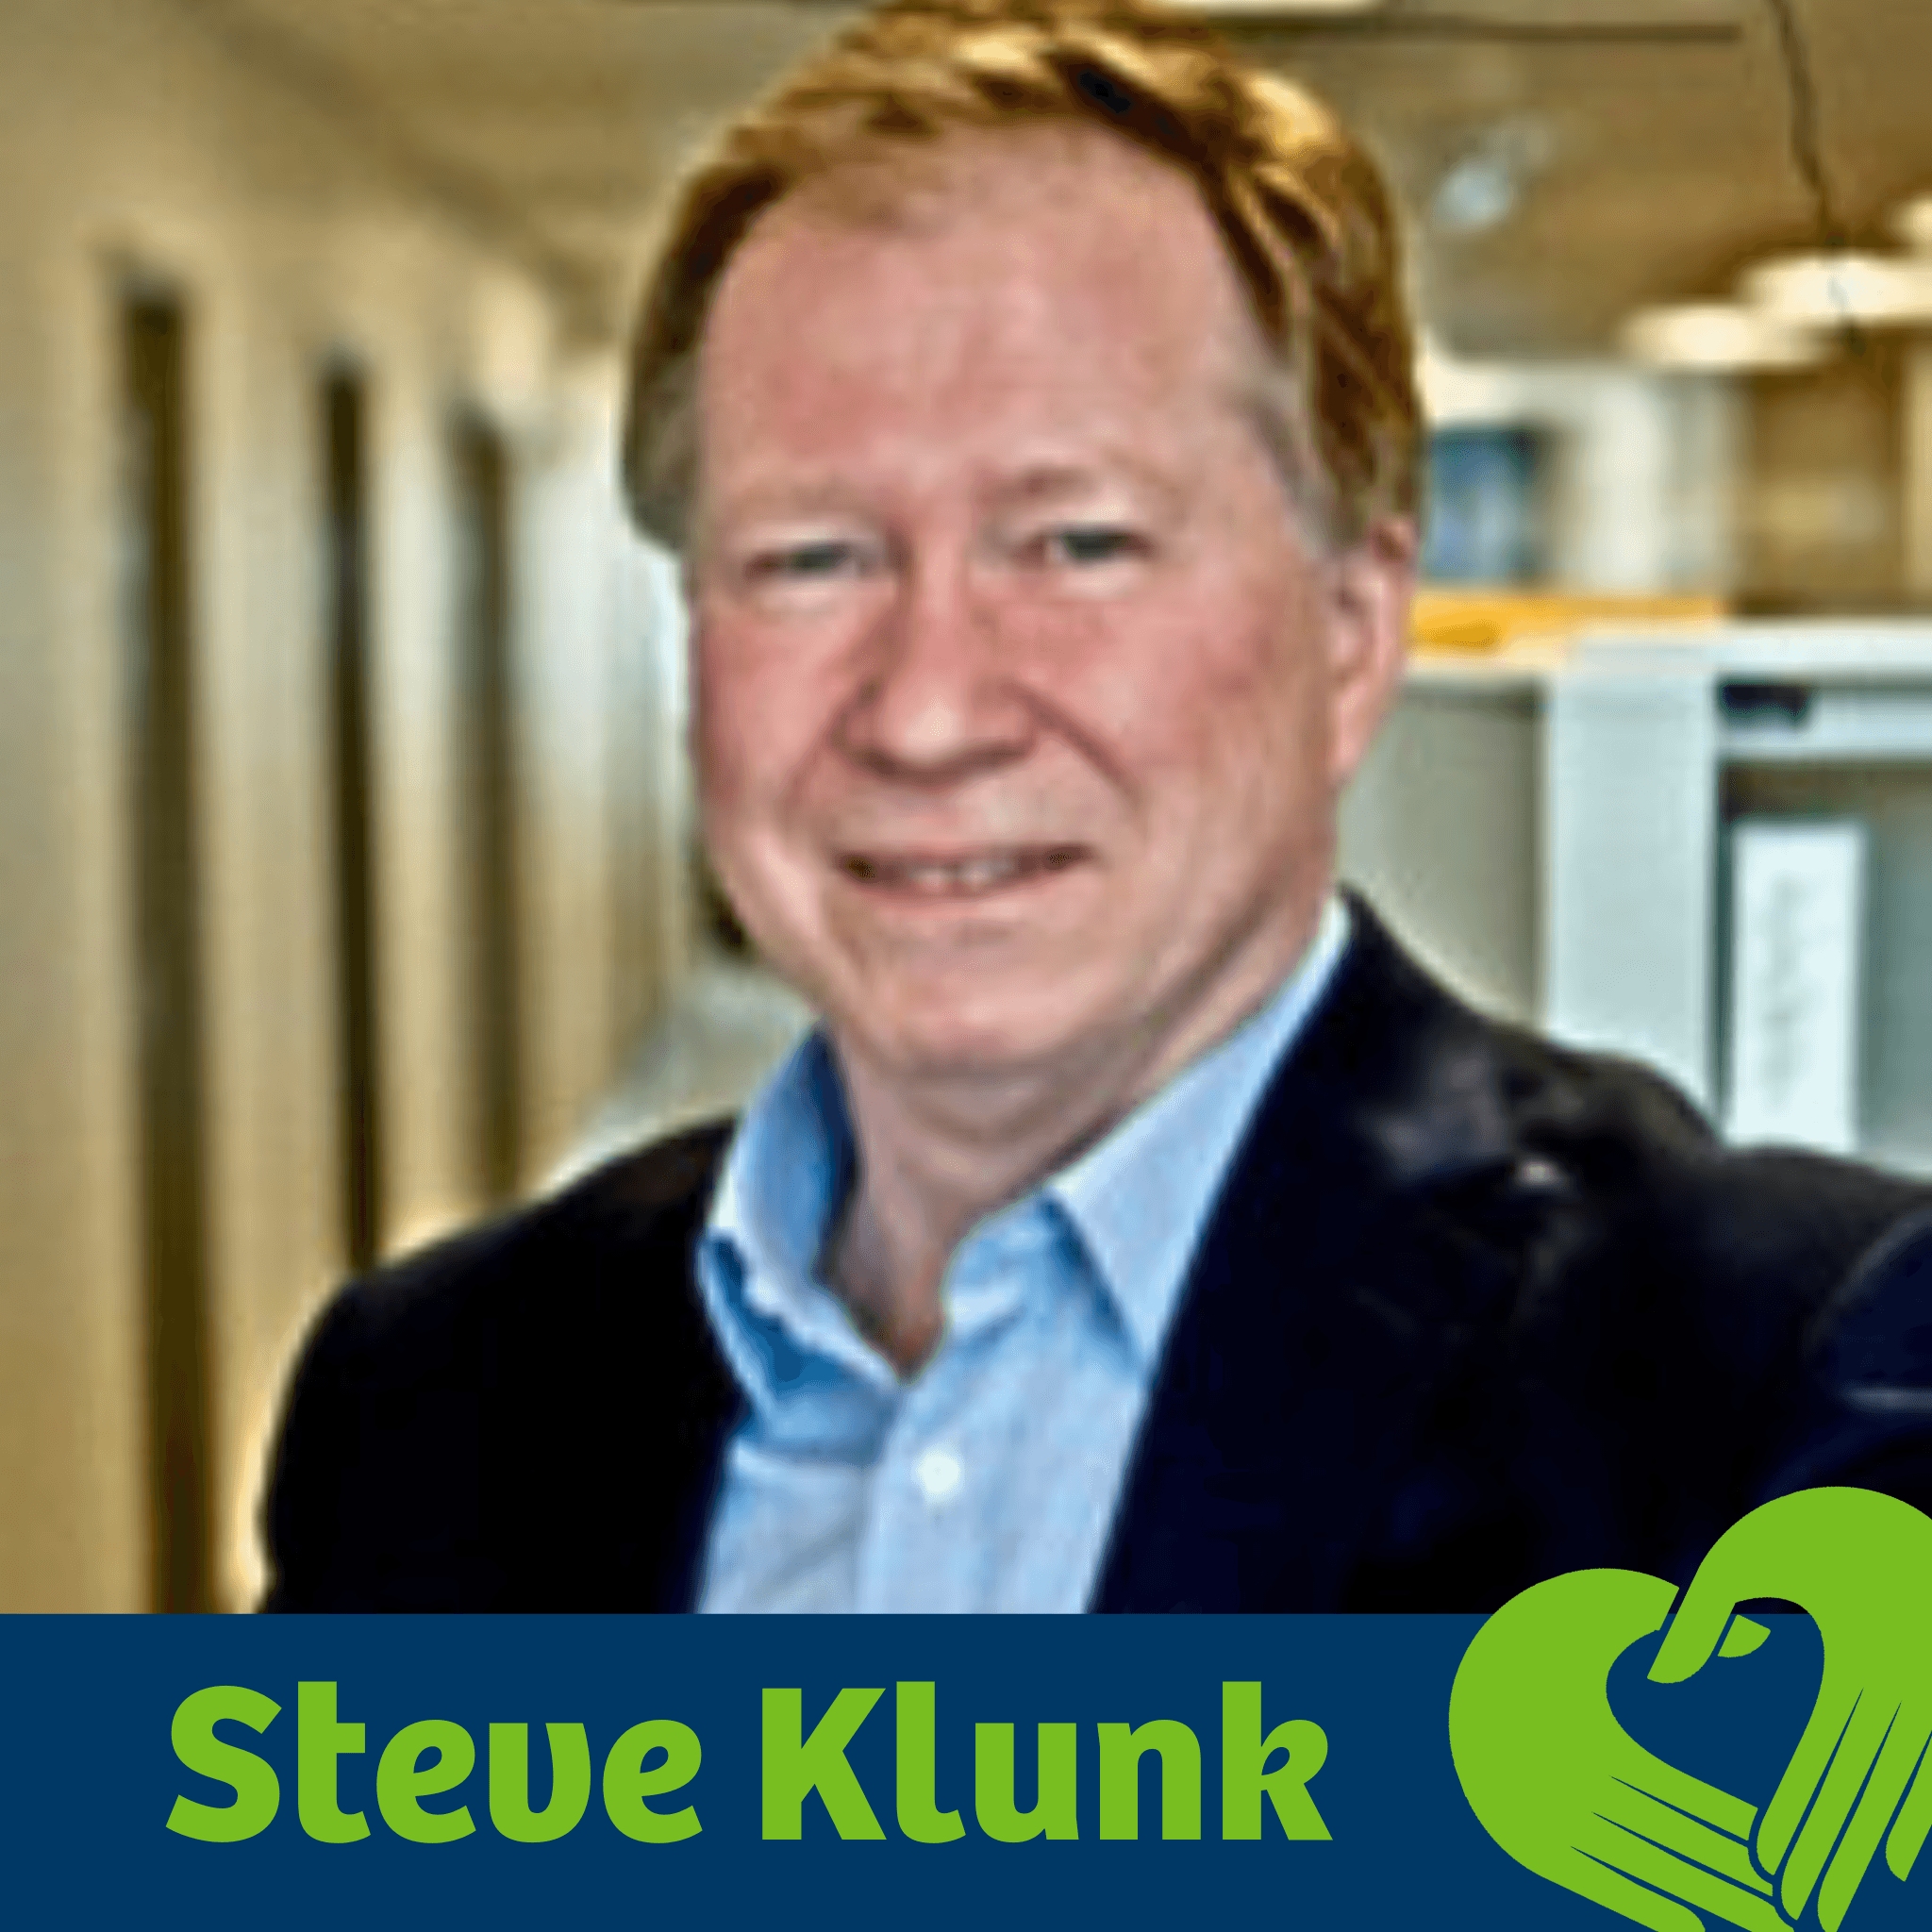 Steve Klunk